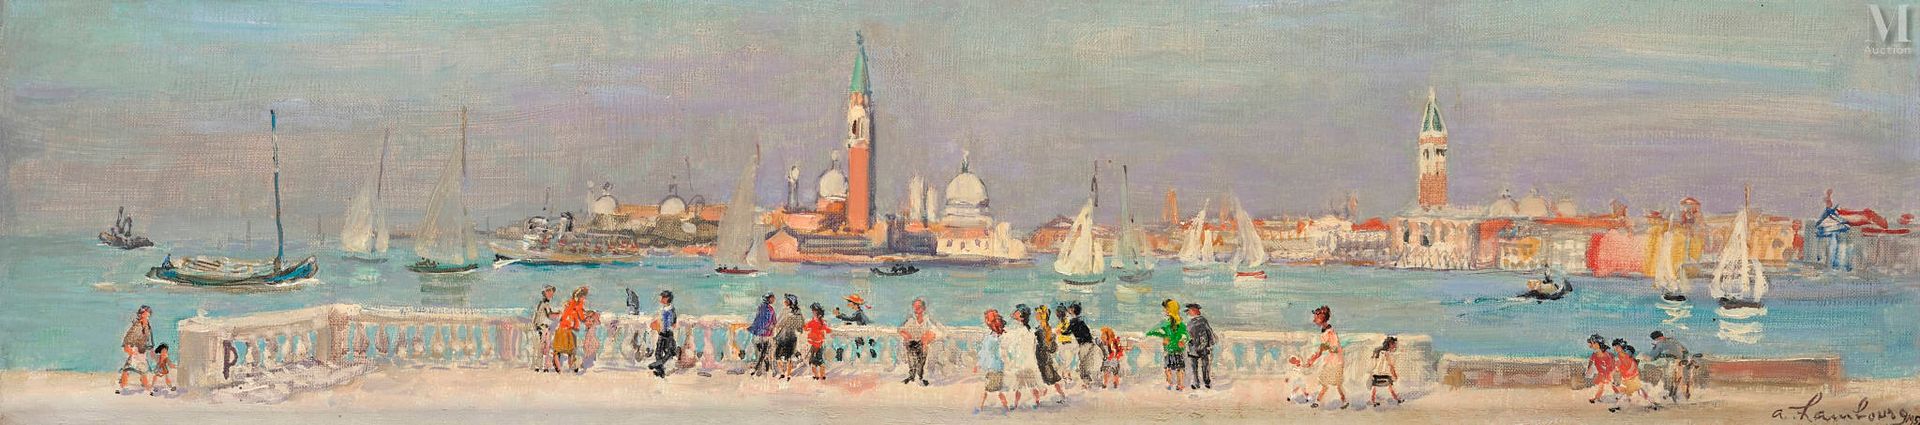 André HAMBOURG (Paris 1909 - 1999) 威尼斯

原创布面油画
15.5 x 61 cm 
右下方有签名和日期 A Hambour&hellip;